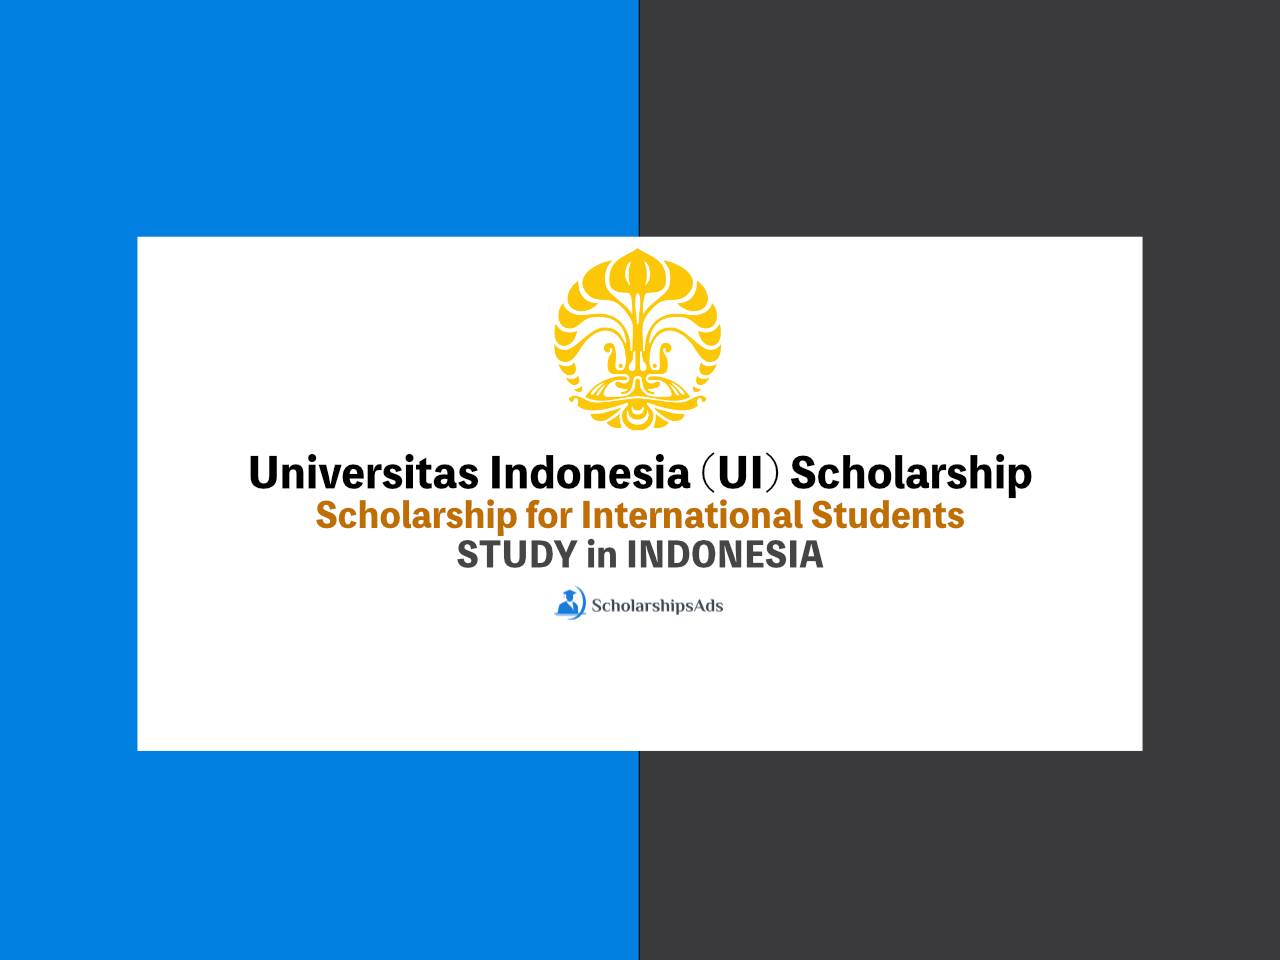 Universitas Indonesia (UI) International Student Scholarships.